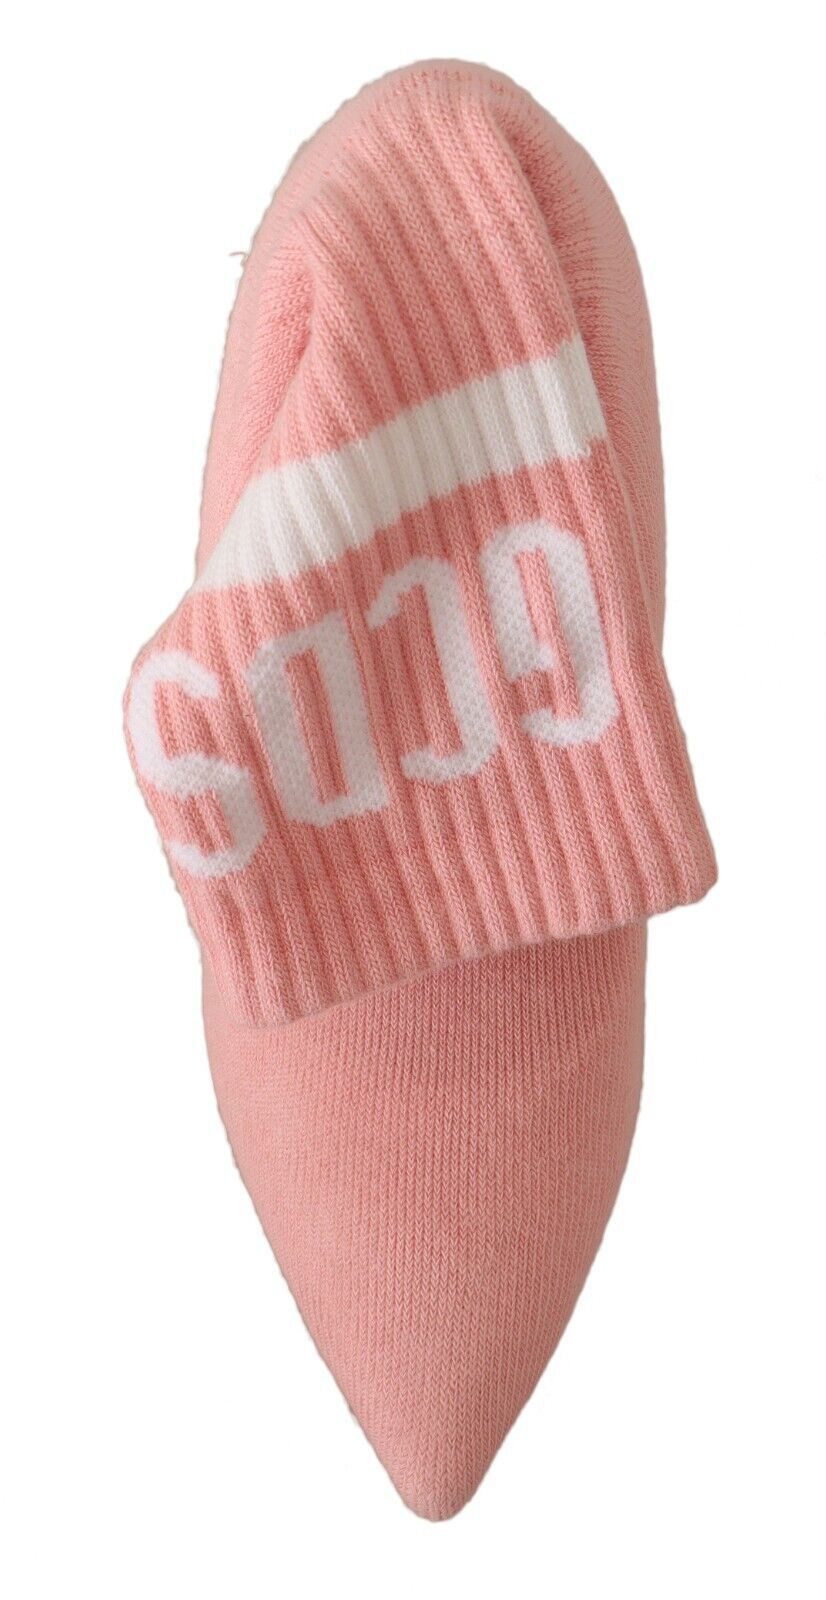 GCDS Pink Suede Logo Socks Block Cadle Stivali Scarpe